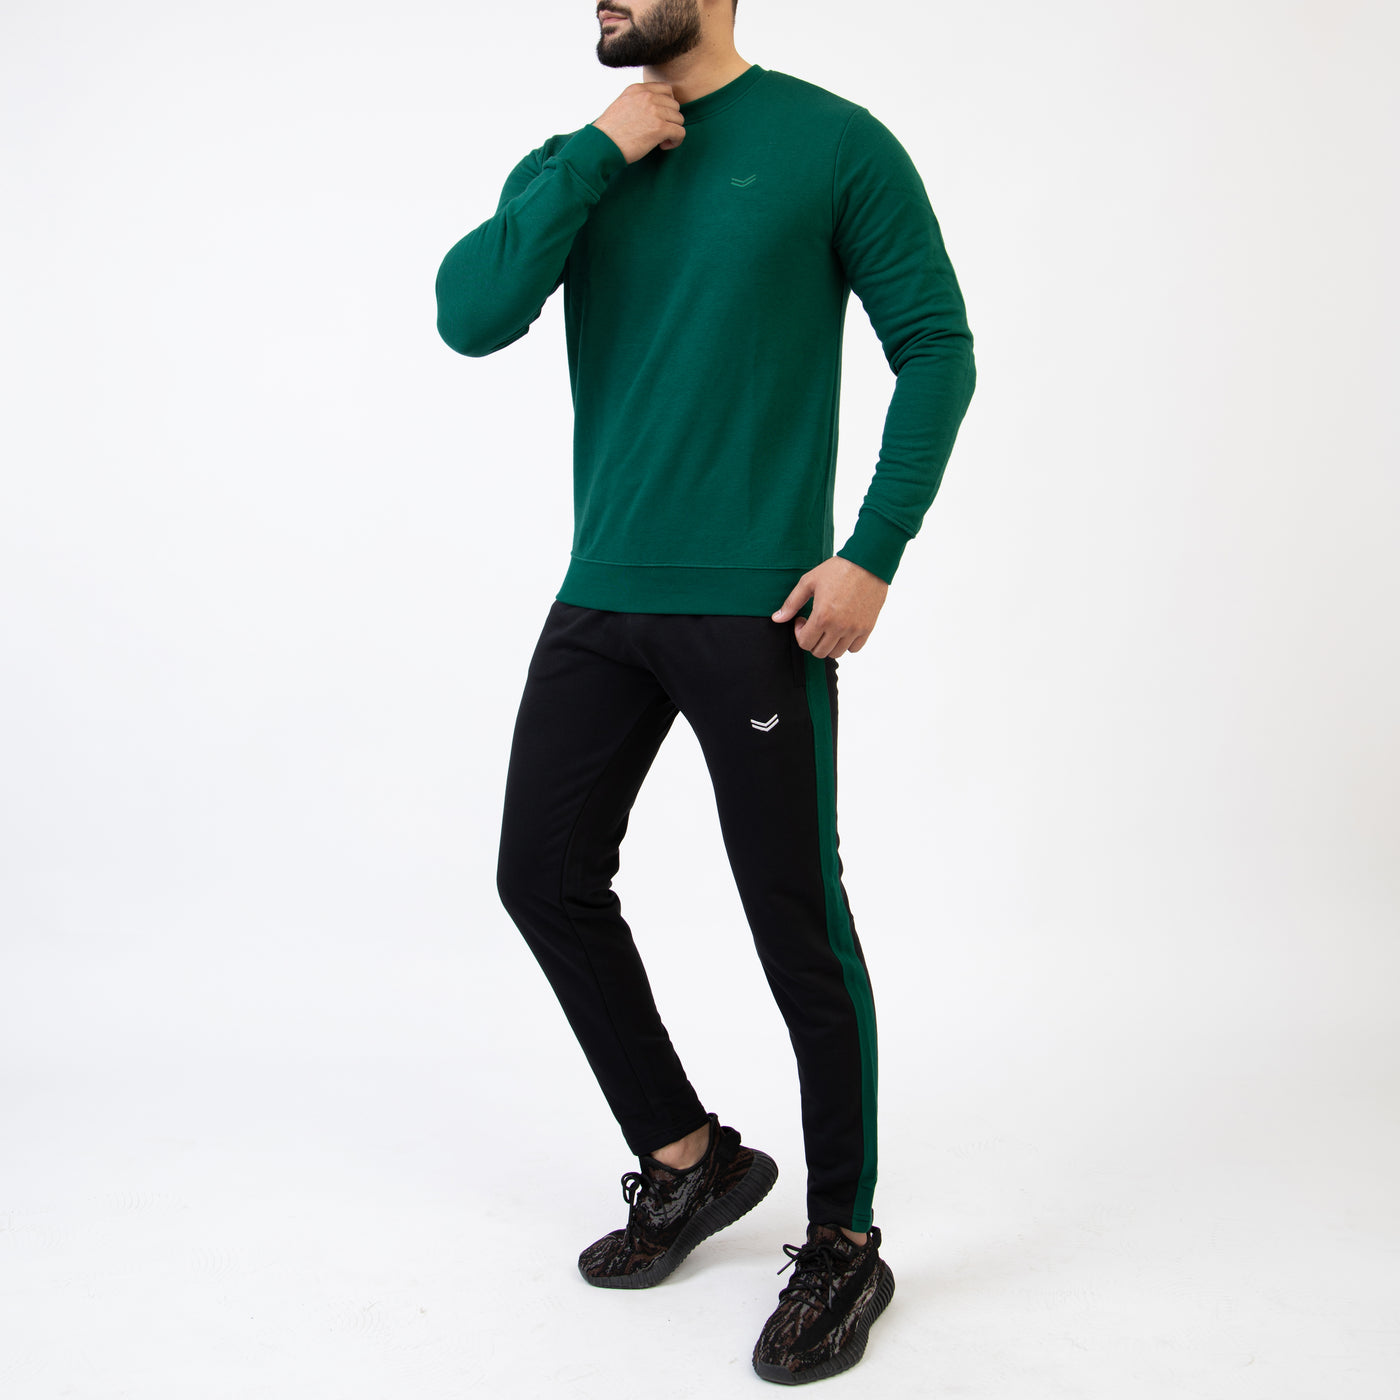 Green & Black Tracksuit with Plain Sweatshirt